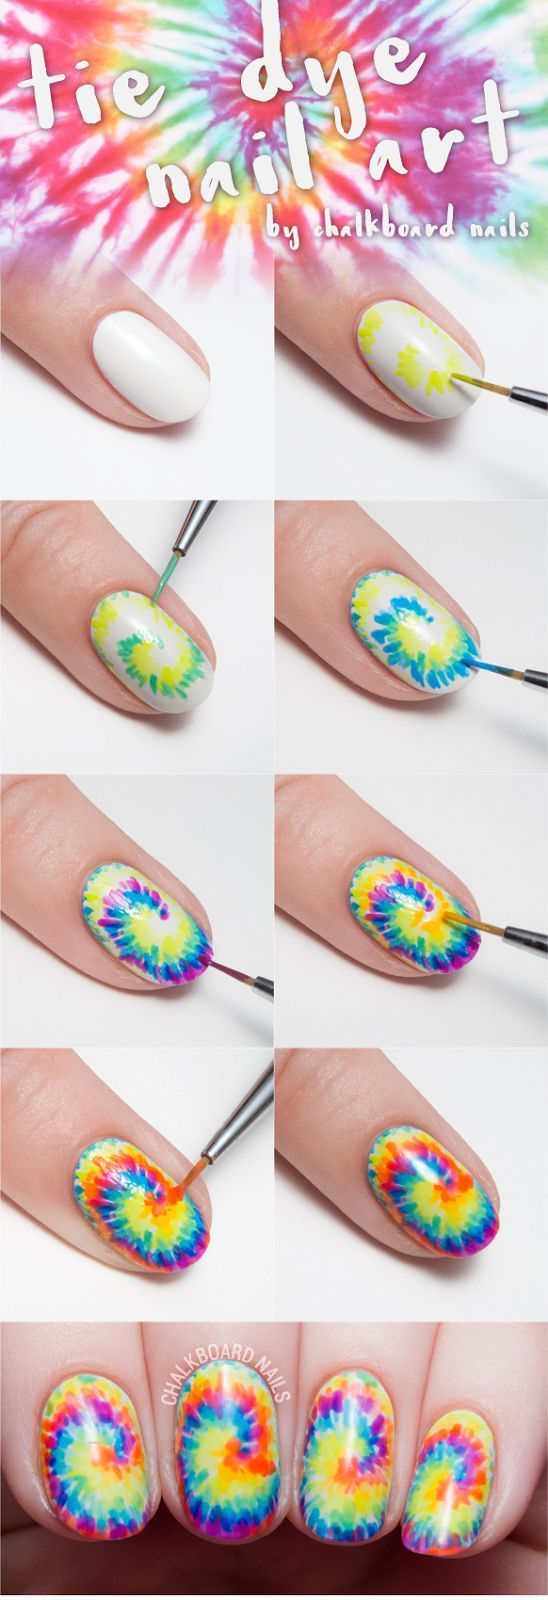 Tie dye nail art tutorials